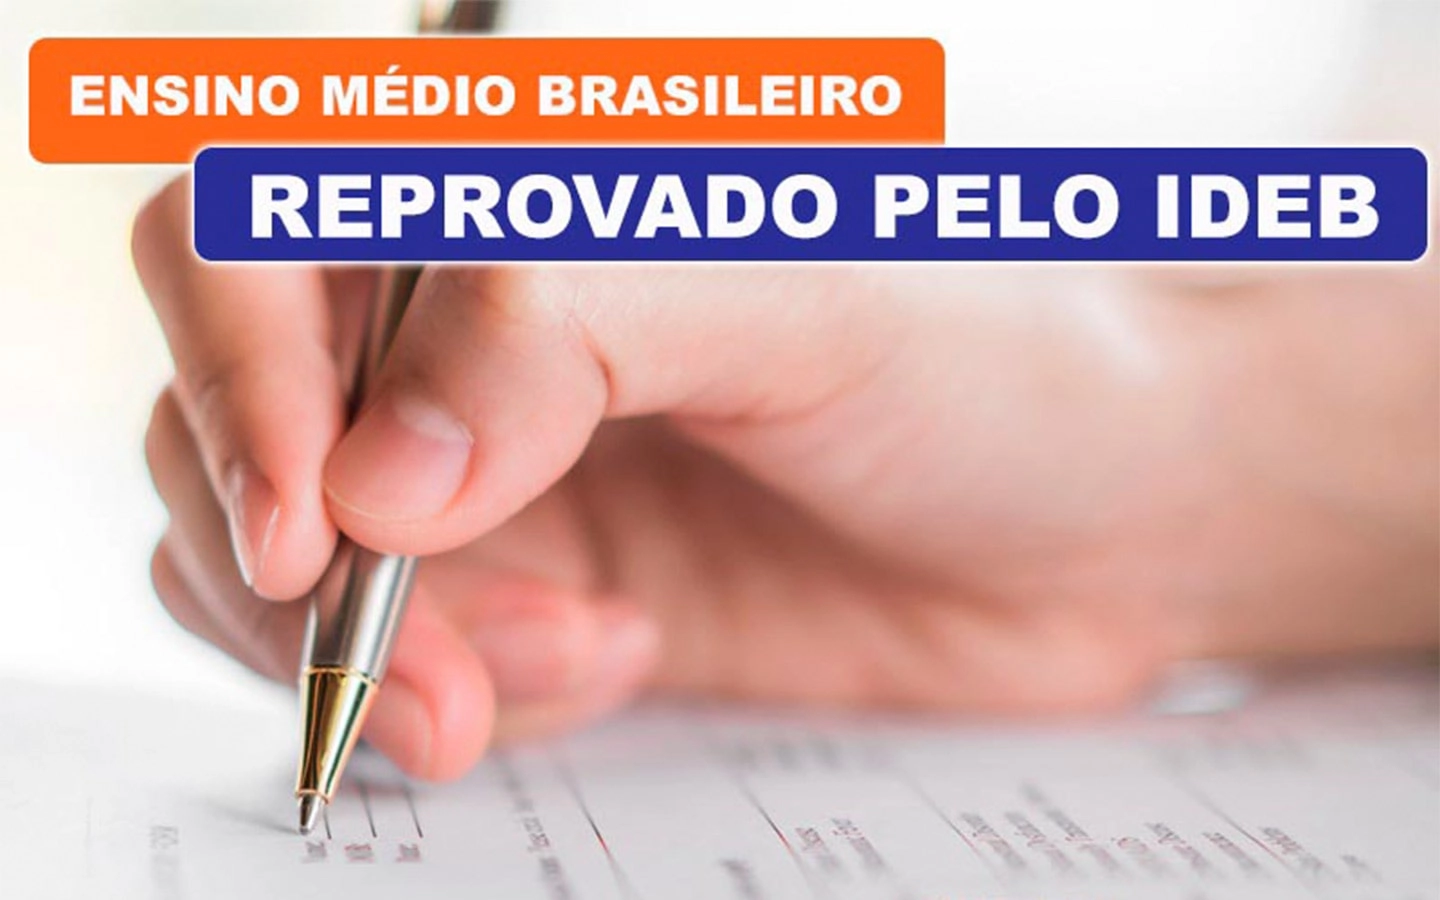 Ensino Médio brasileiro reprovado pelo IDEB